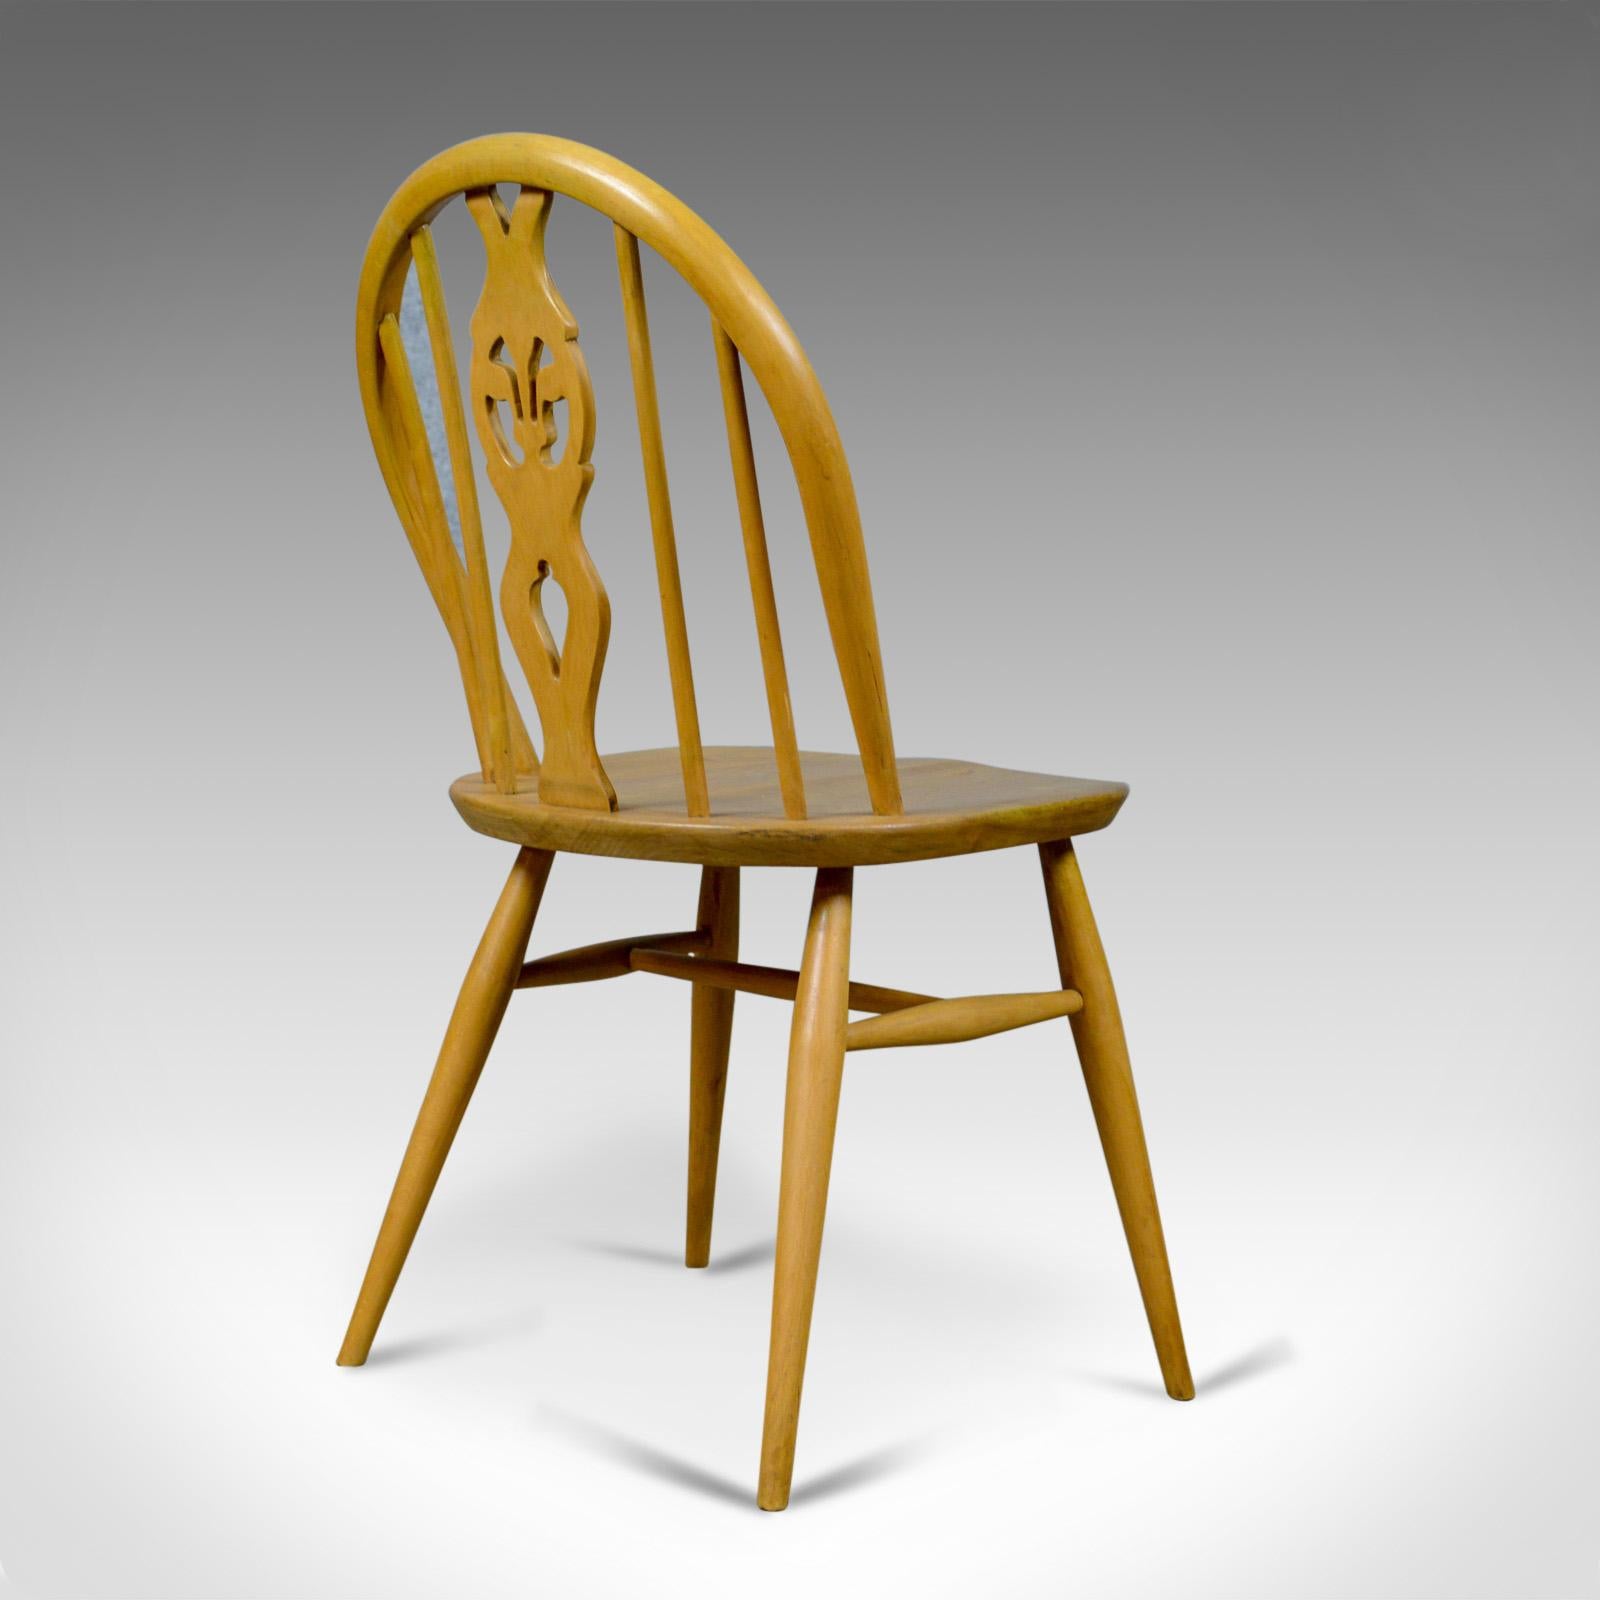 20th Century Set of Four Mid-Century Modern Dining Chairs, English, Beech, Danish Taste